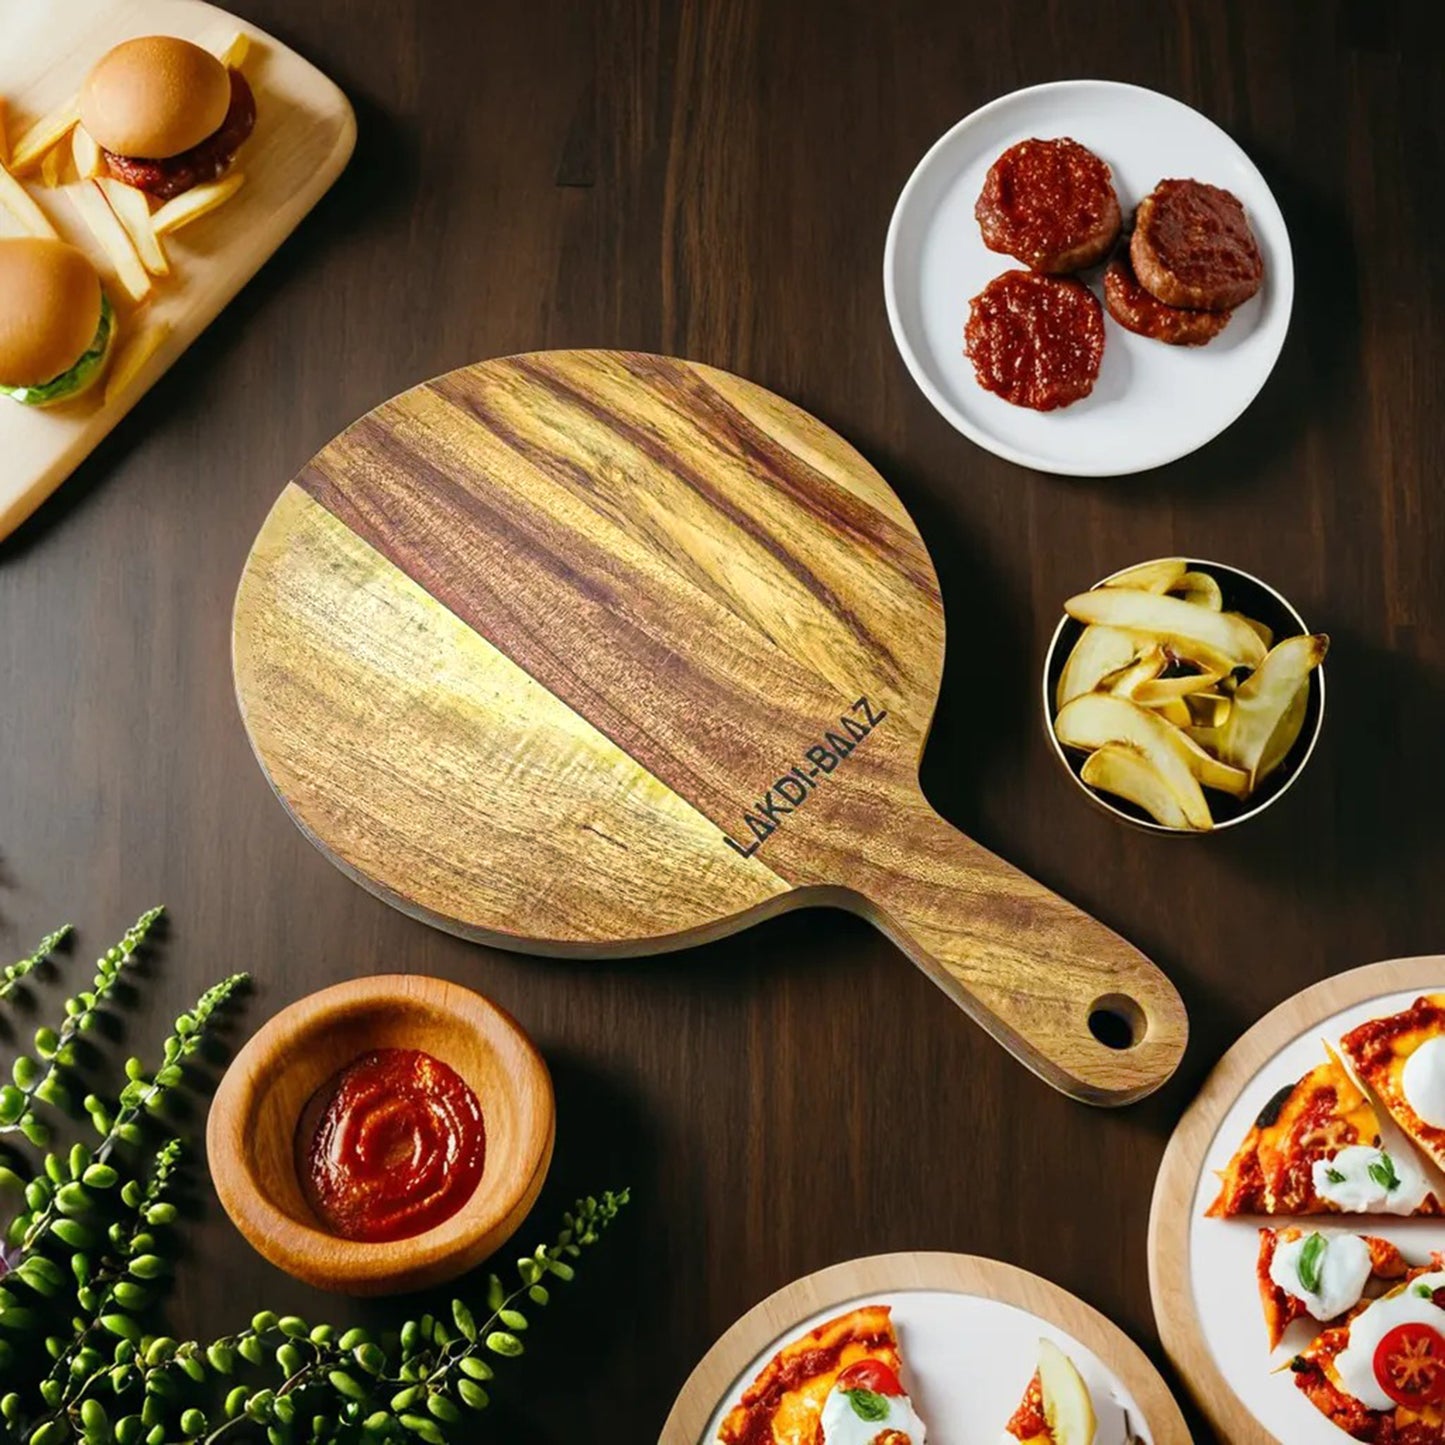 Buy Lakdi-Baaz| Premium Wooden Platter Round Cutting Board Serving Board  Chopping Board Small(19 X 29 CM)